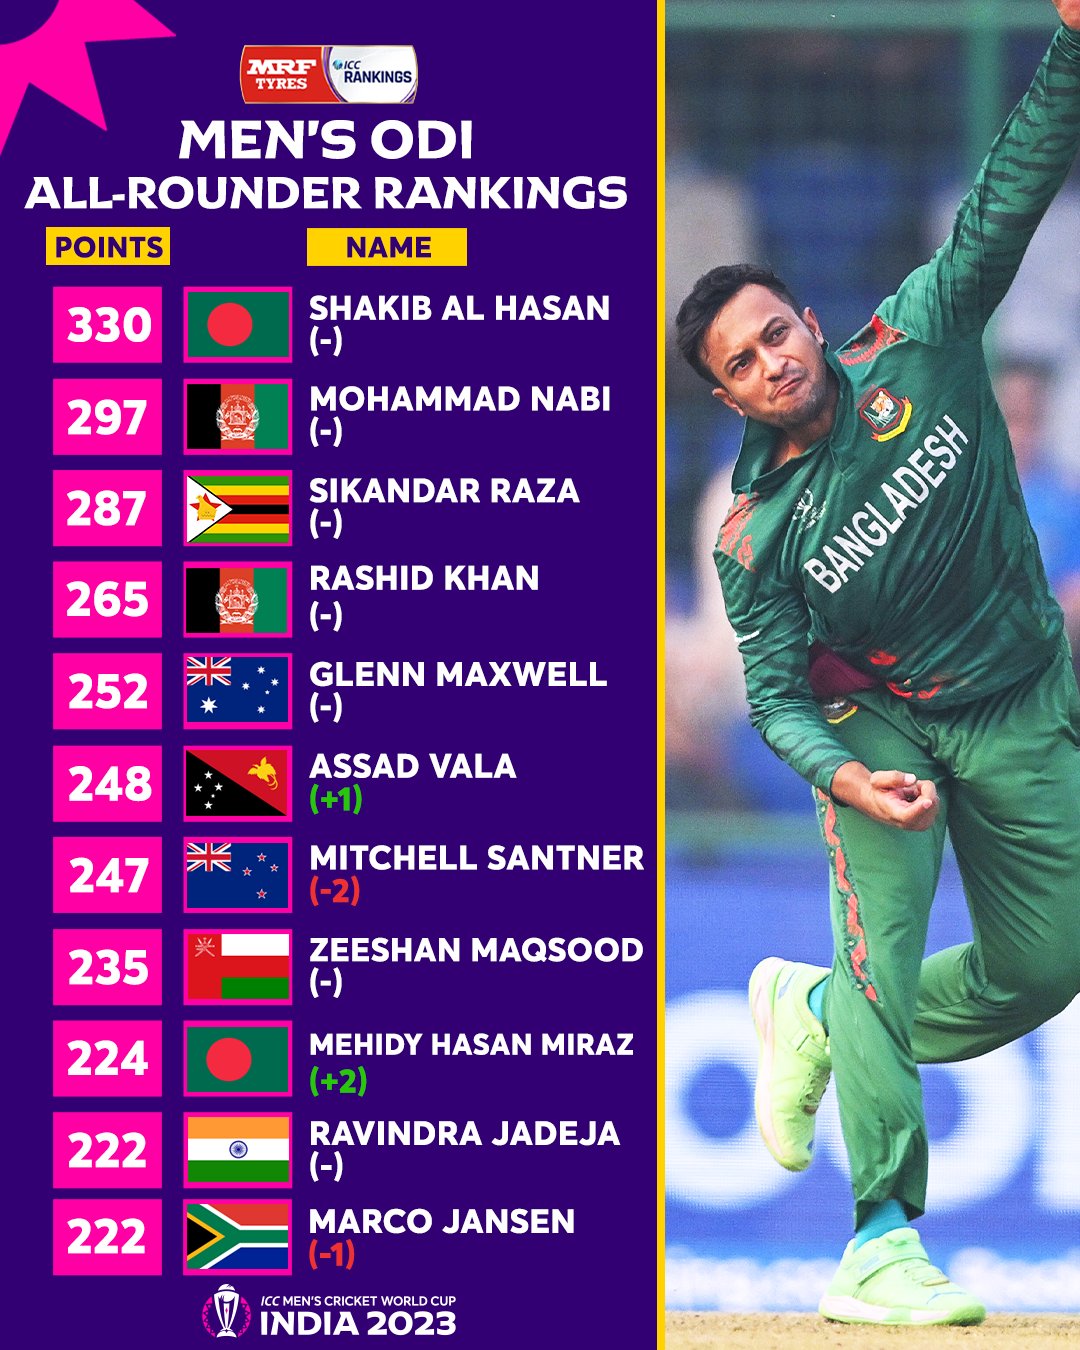 World No 1 Cricket Player - Top